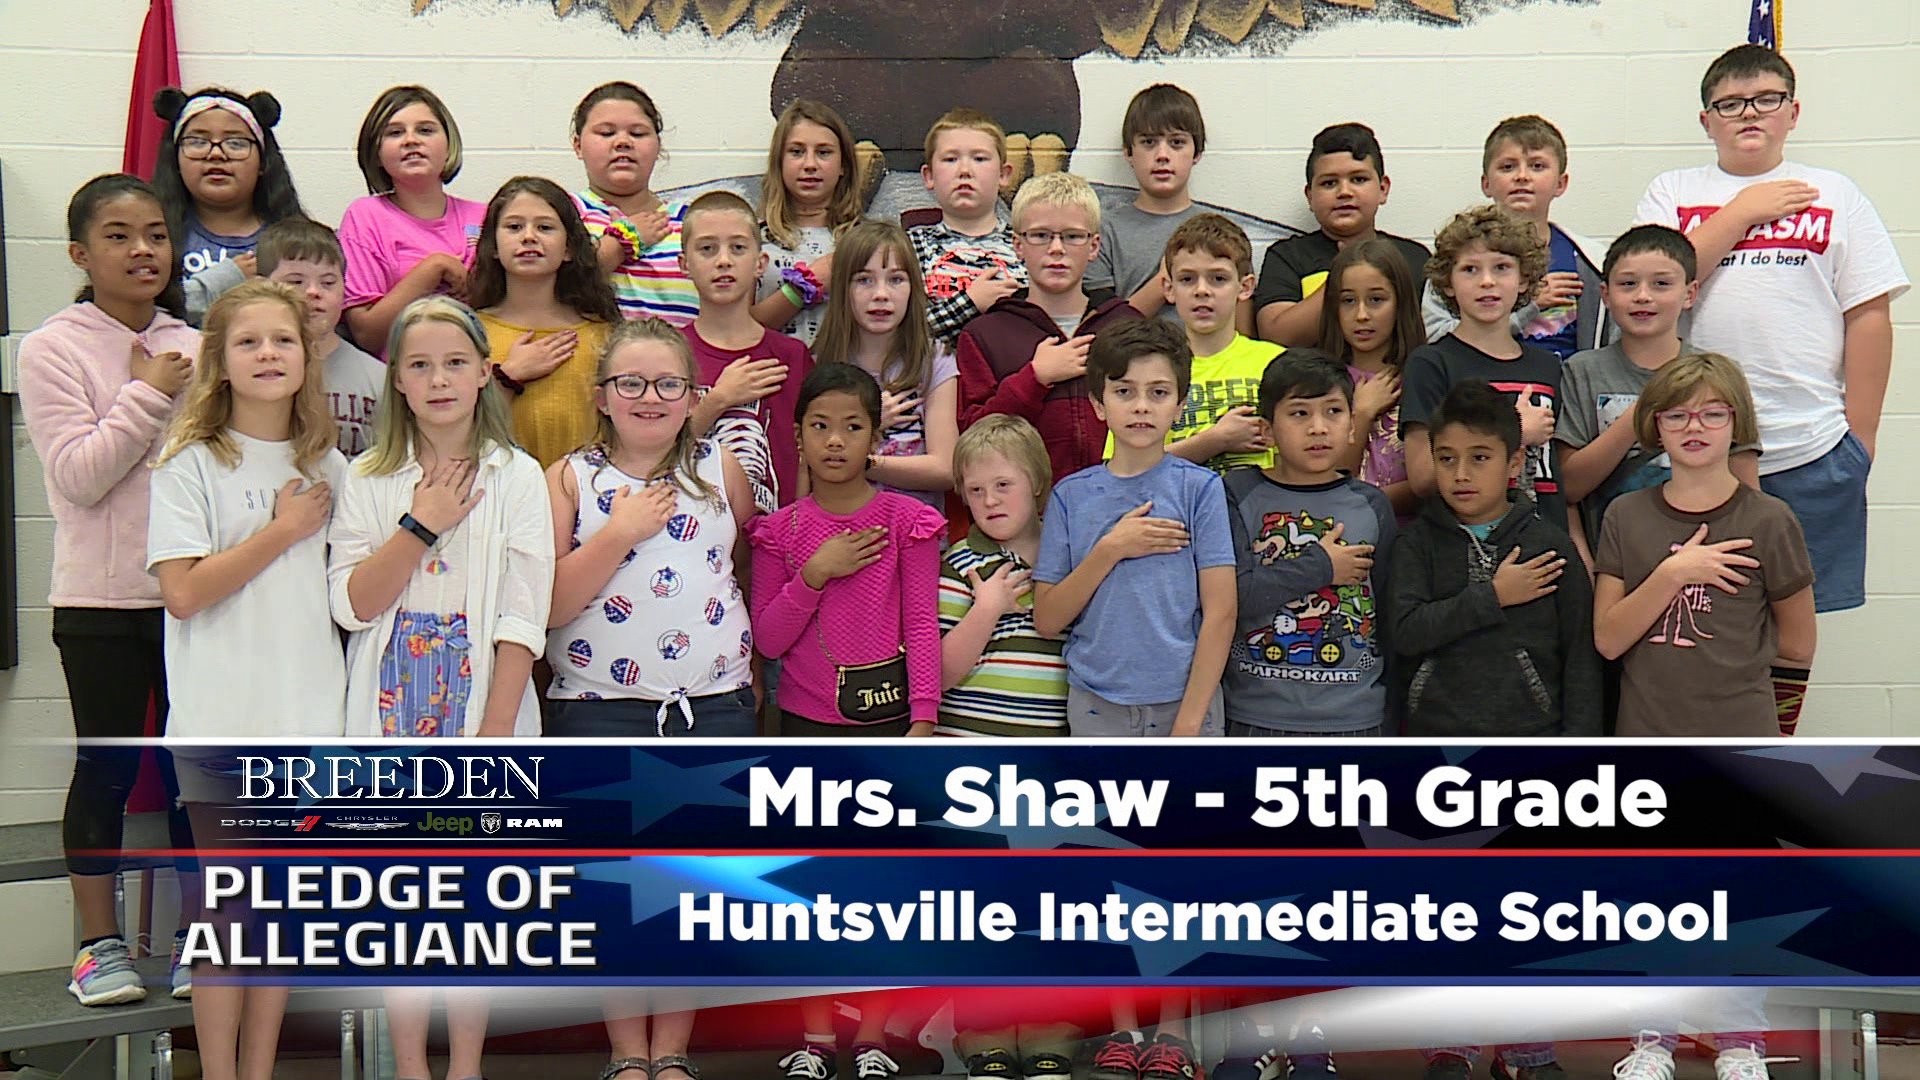 Mrs. Shaw - 5th Grade Huntsville Intermediate School